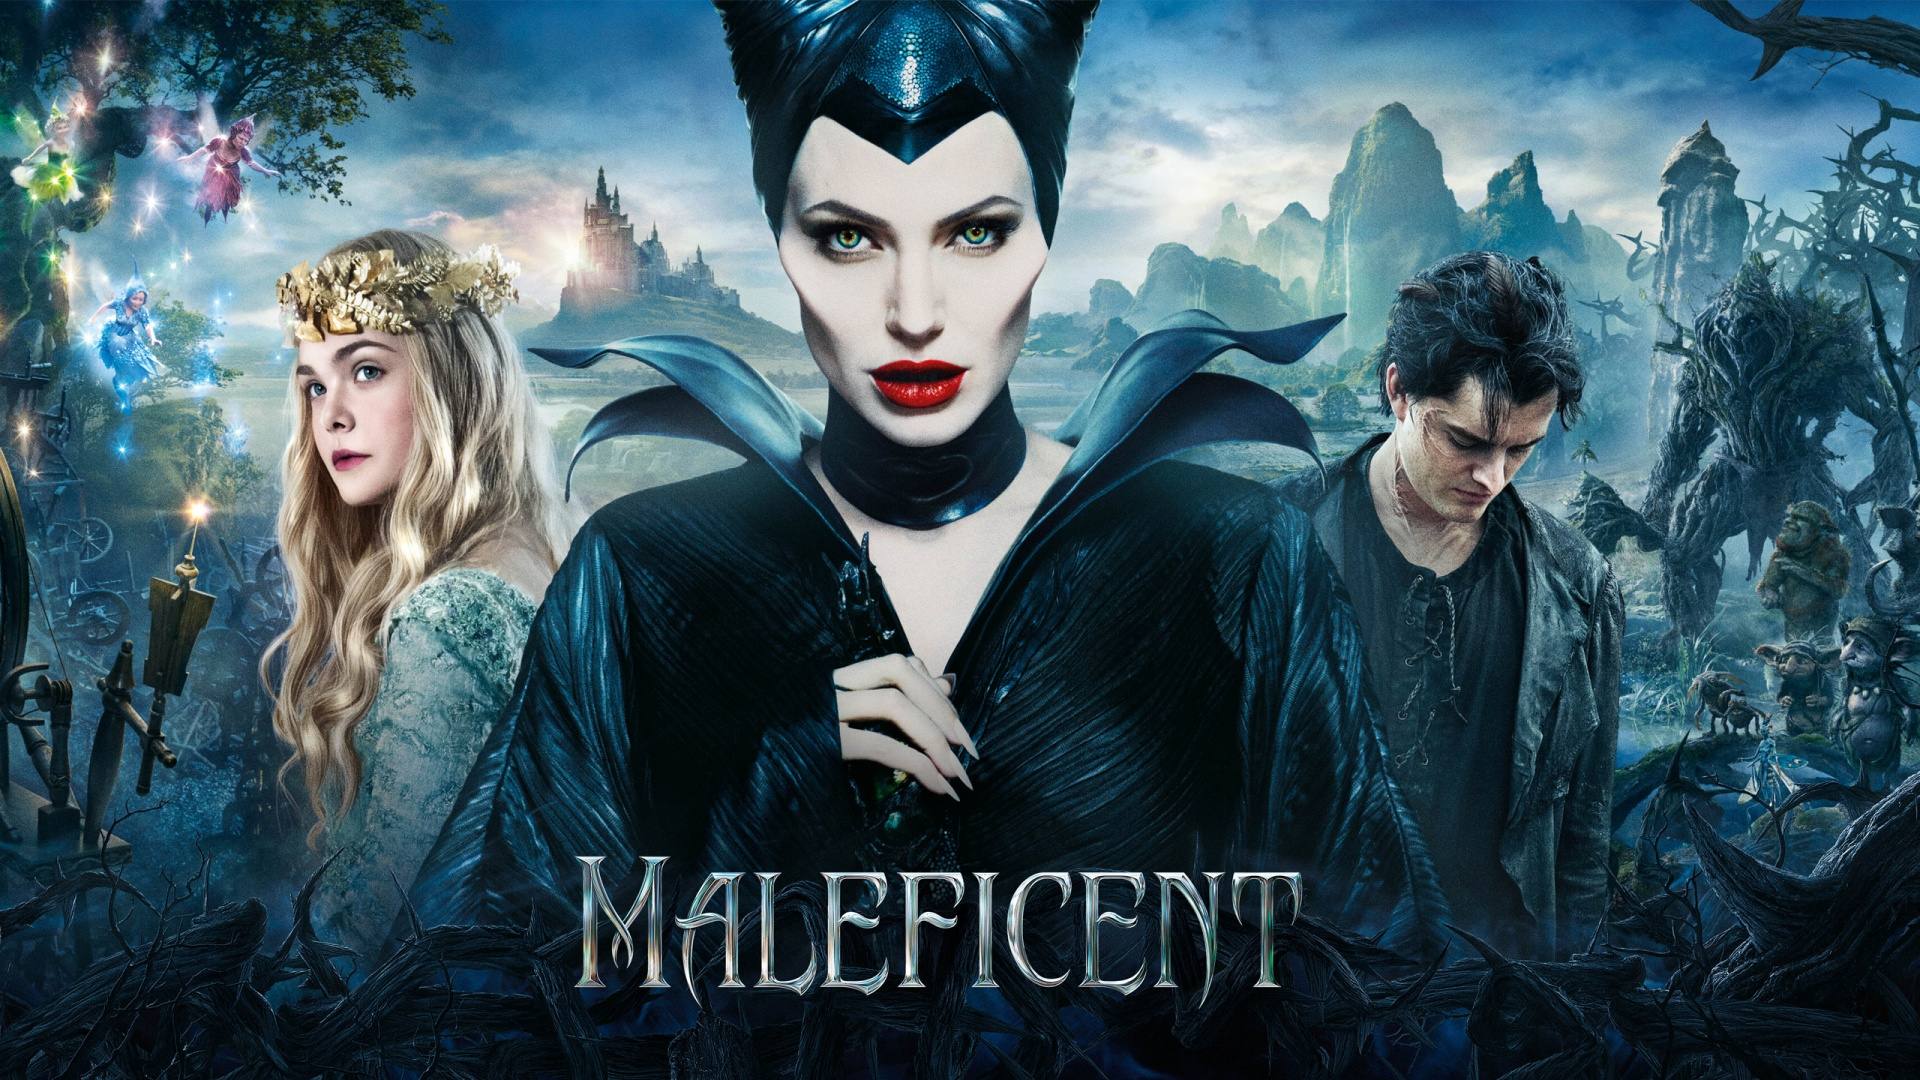 Maleficent Movie Poster Wallpaper